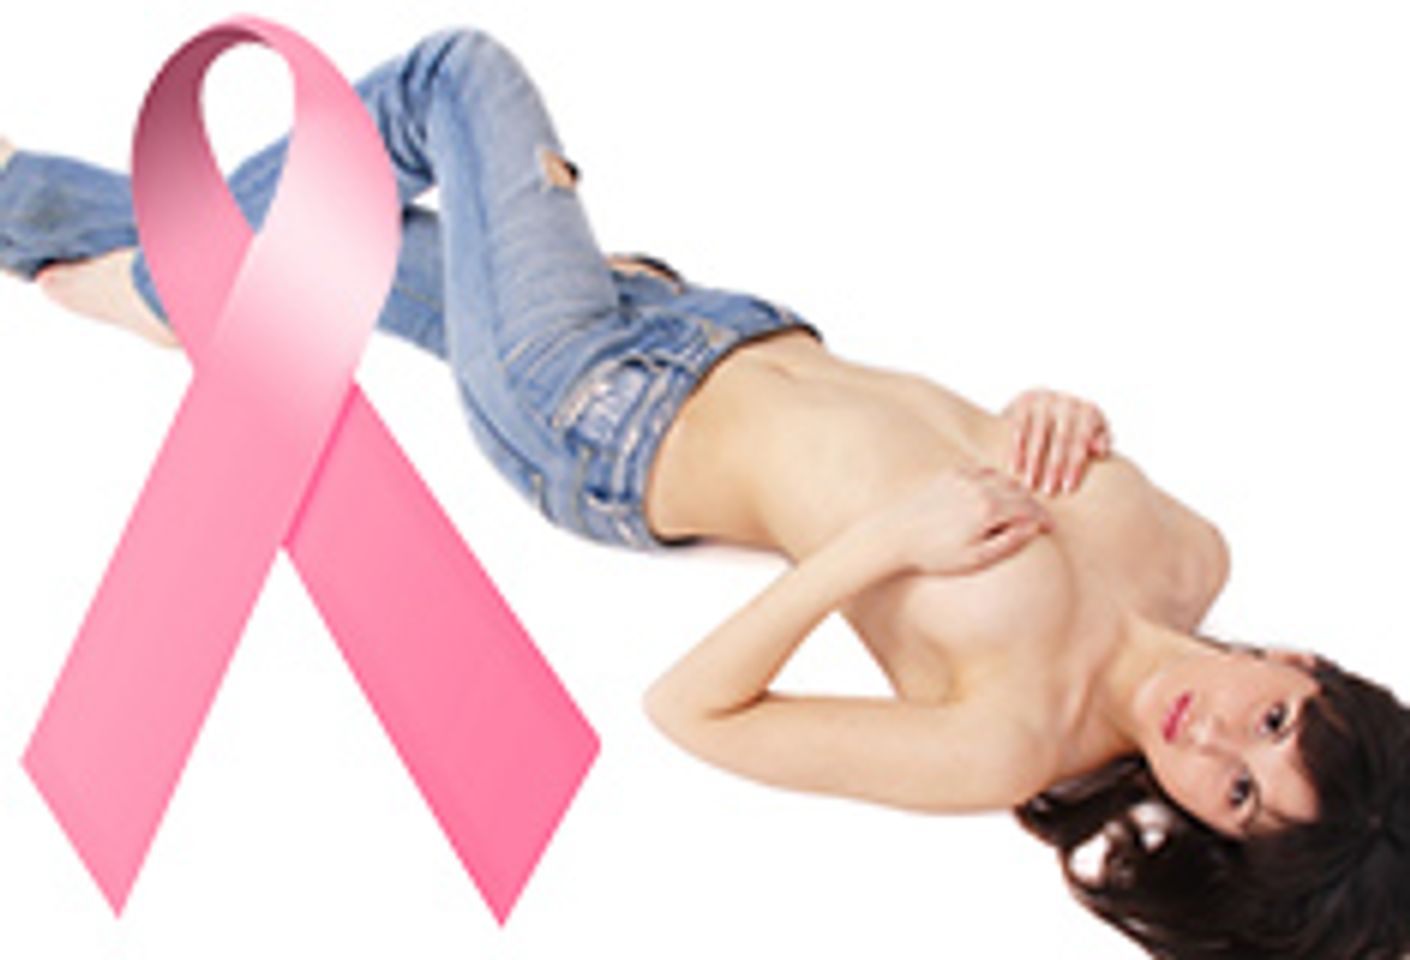 Adam & Eve Donates to Breast Cancer Awareness